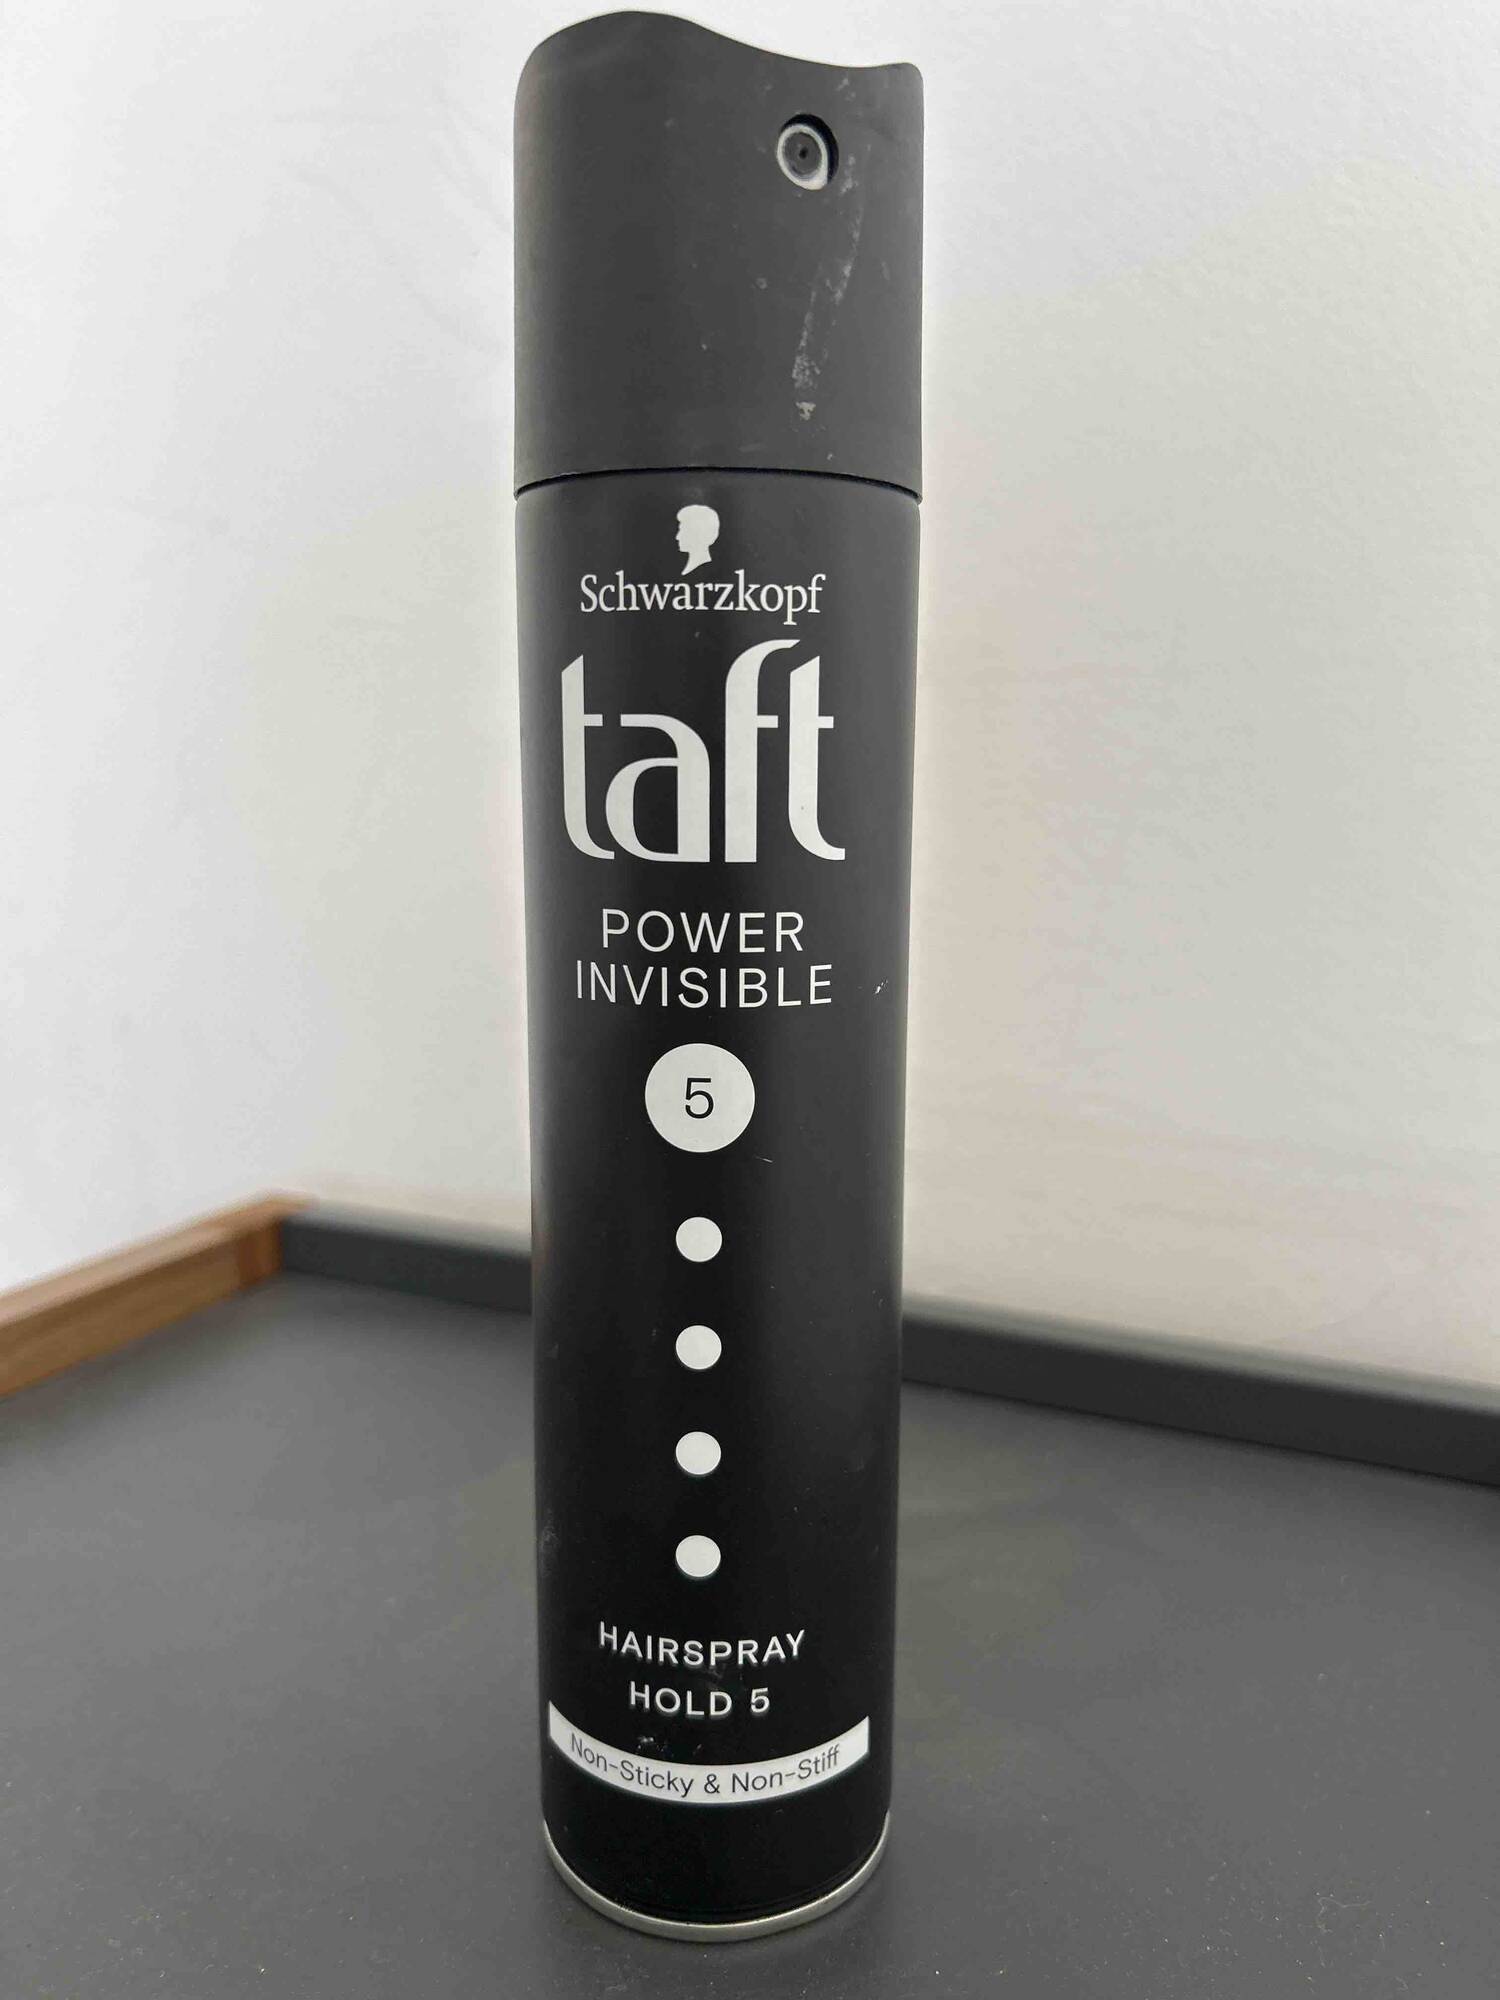 SCHWARZKOPF - Taft power invisible - Hairspray hold 5